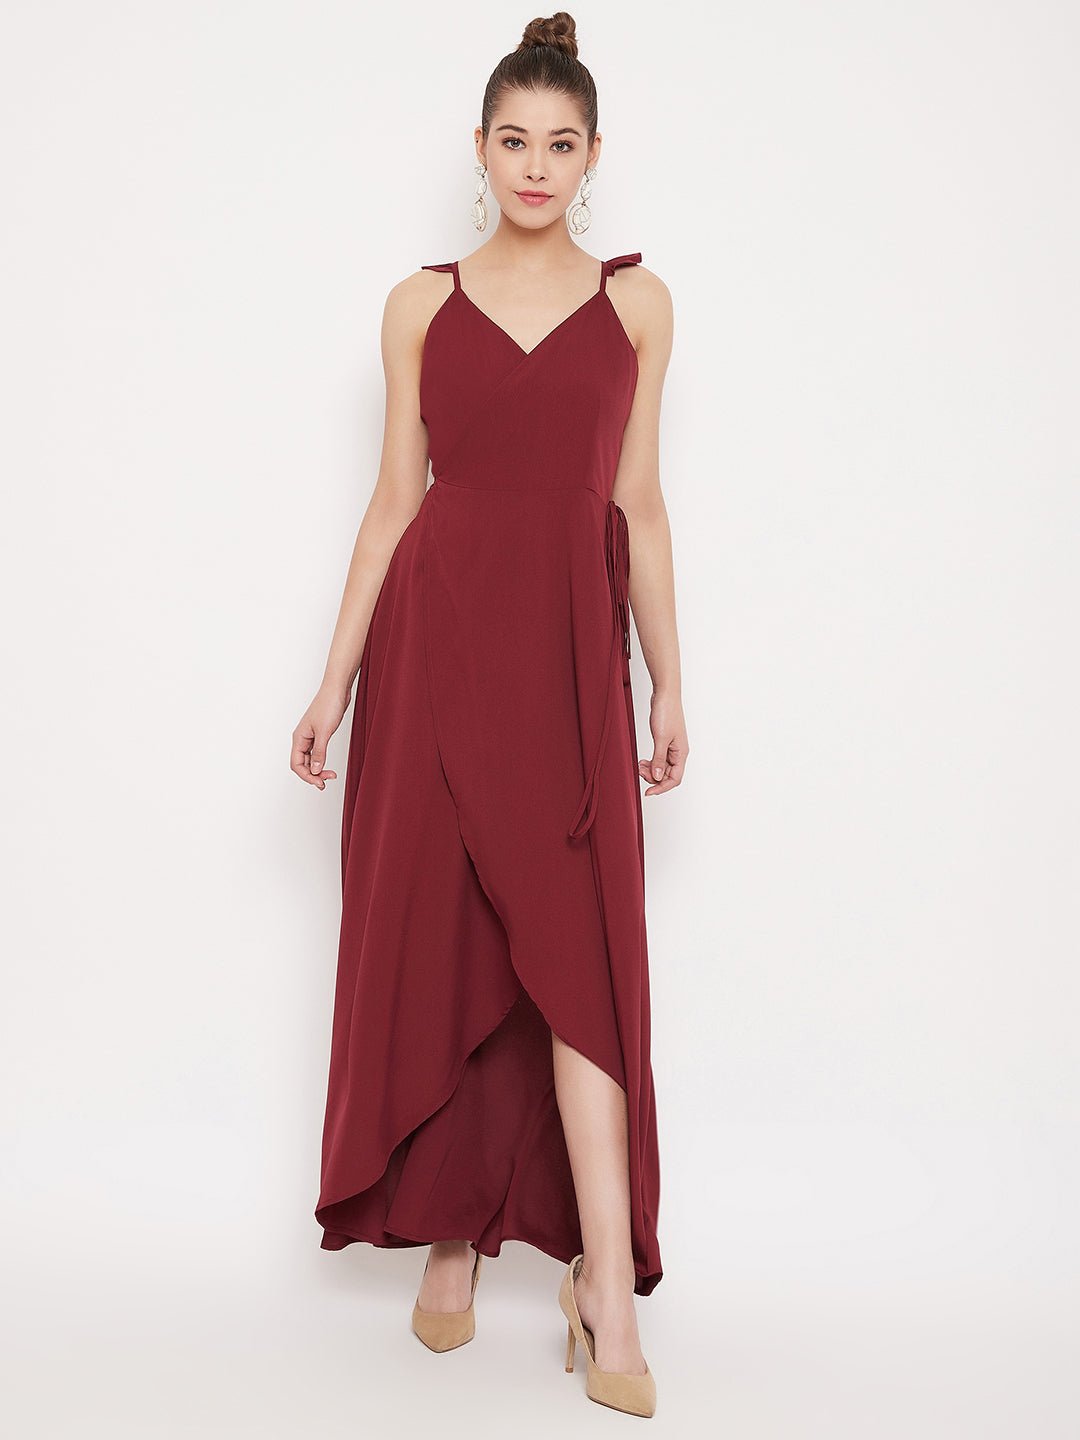 Folk Republic Women Solid Maroon V-Neck Thigh-High Slit Tulip Hem Wrap Maxi Dress - #folk republic#